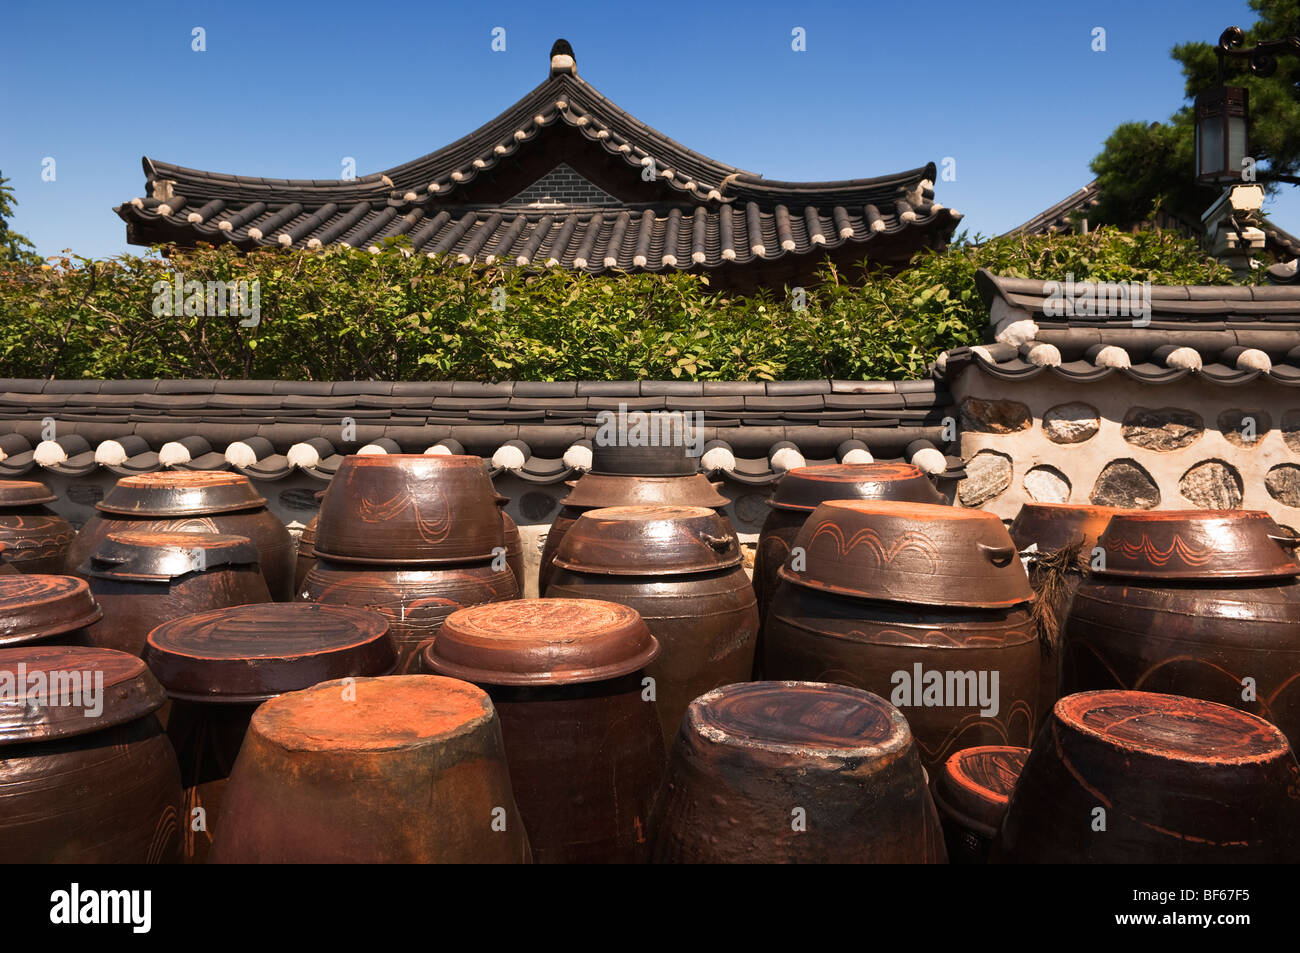 Traditional Ceramic pots for food storage in the Namsangol Hanok Village, Seoul, South Korea. Stock Photo